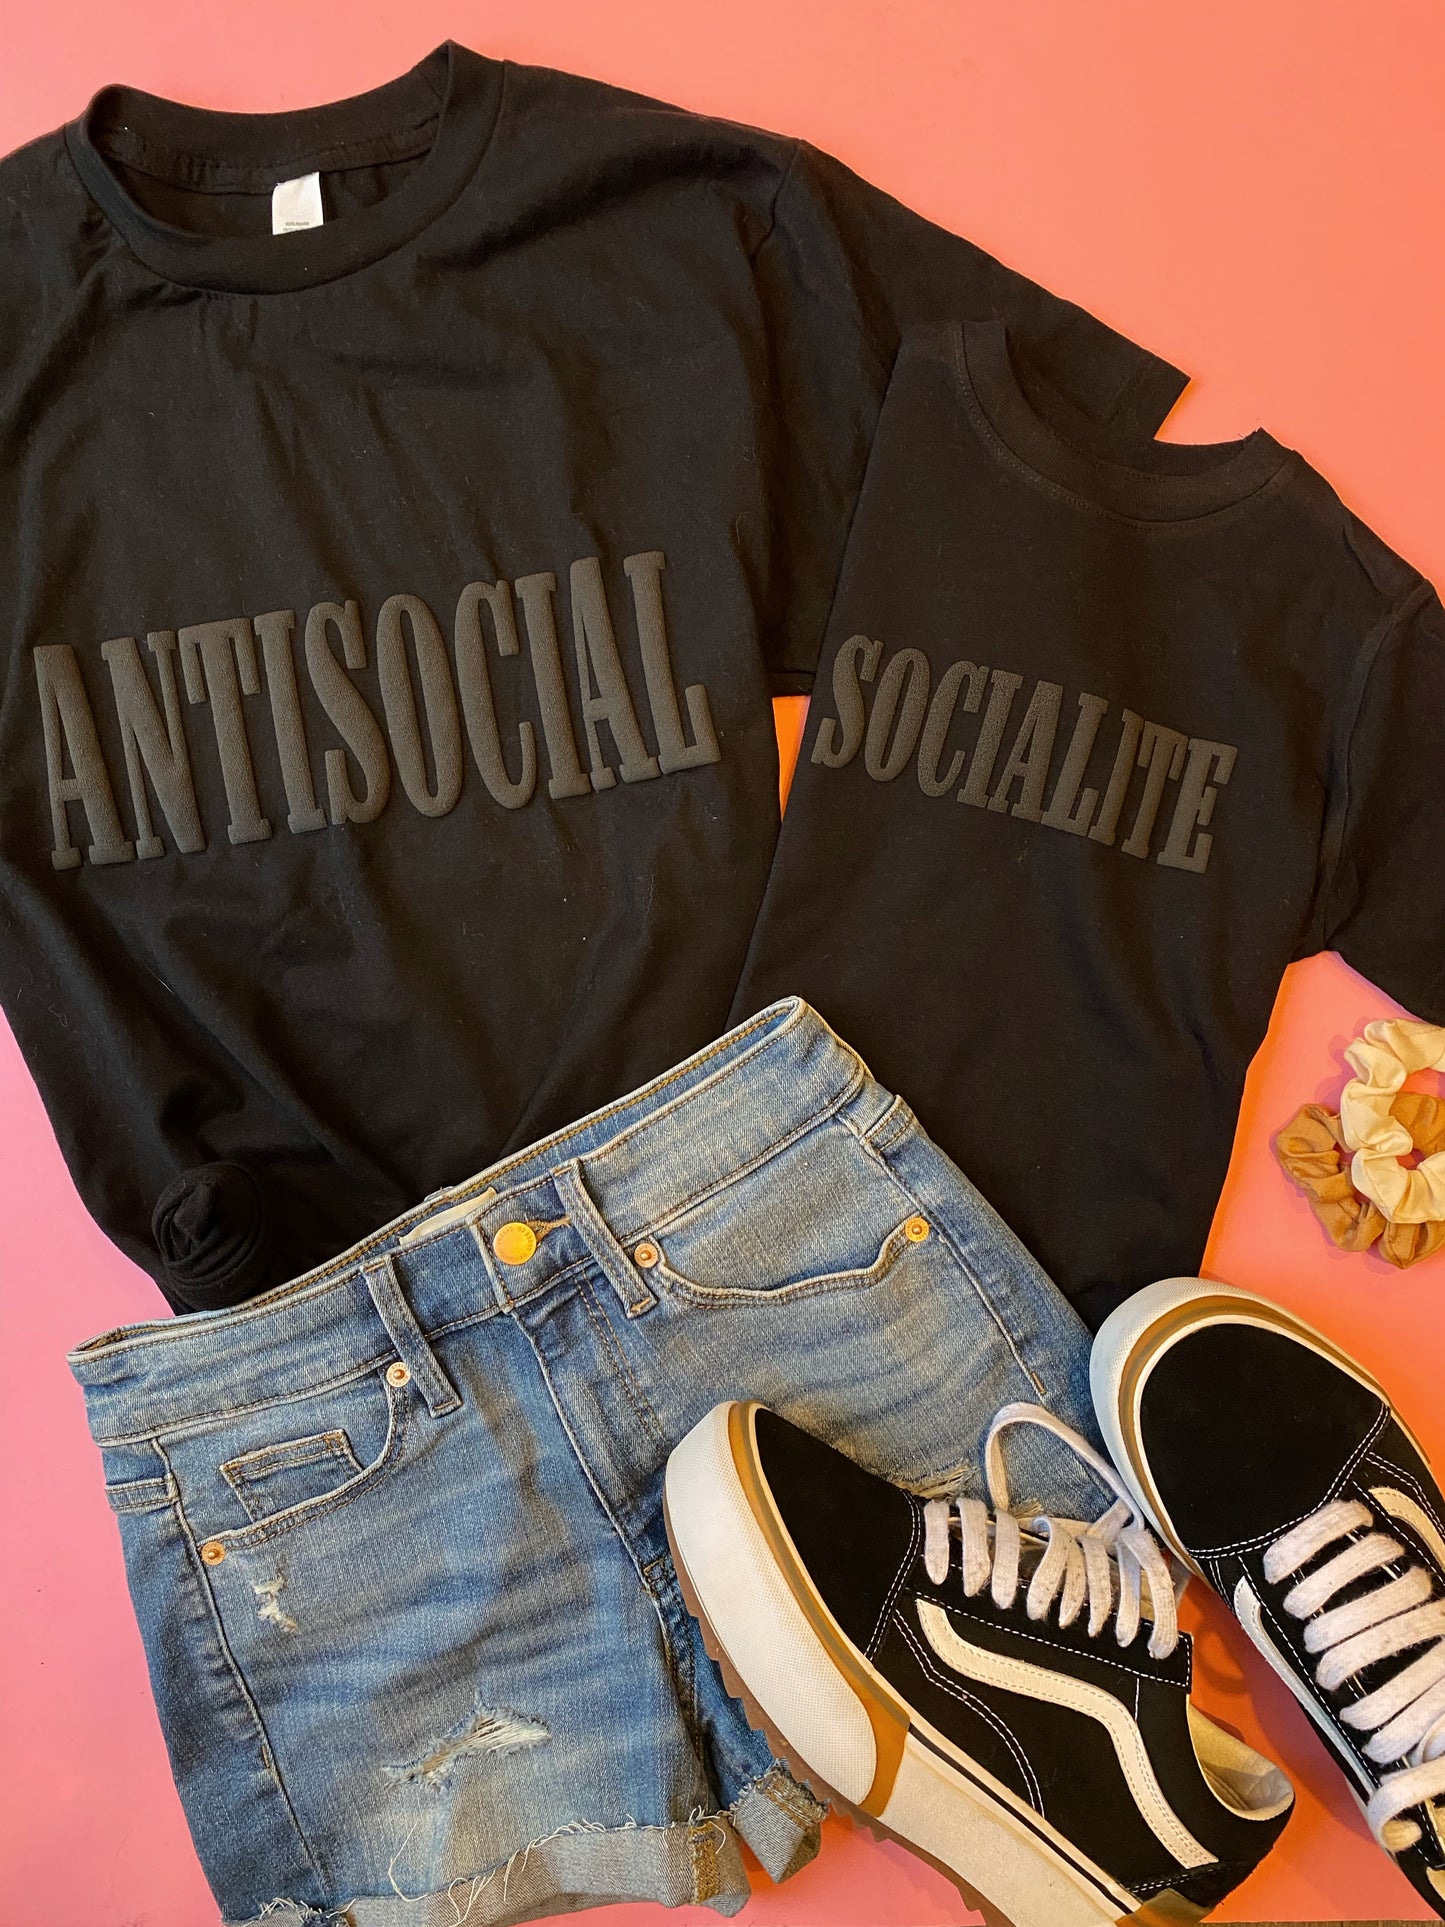 ANTISOCIAL + SOCIALITE - Black PUFF (matching)